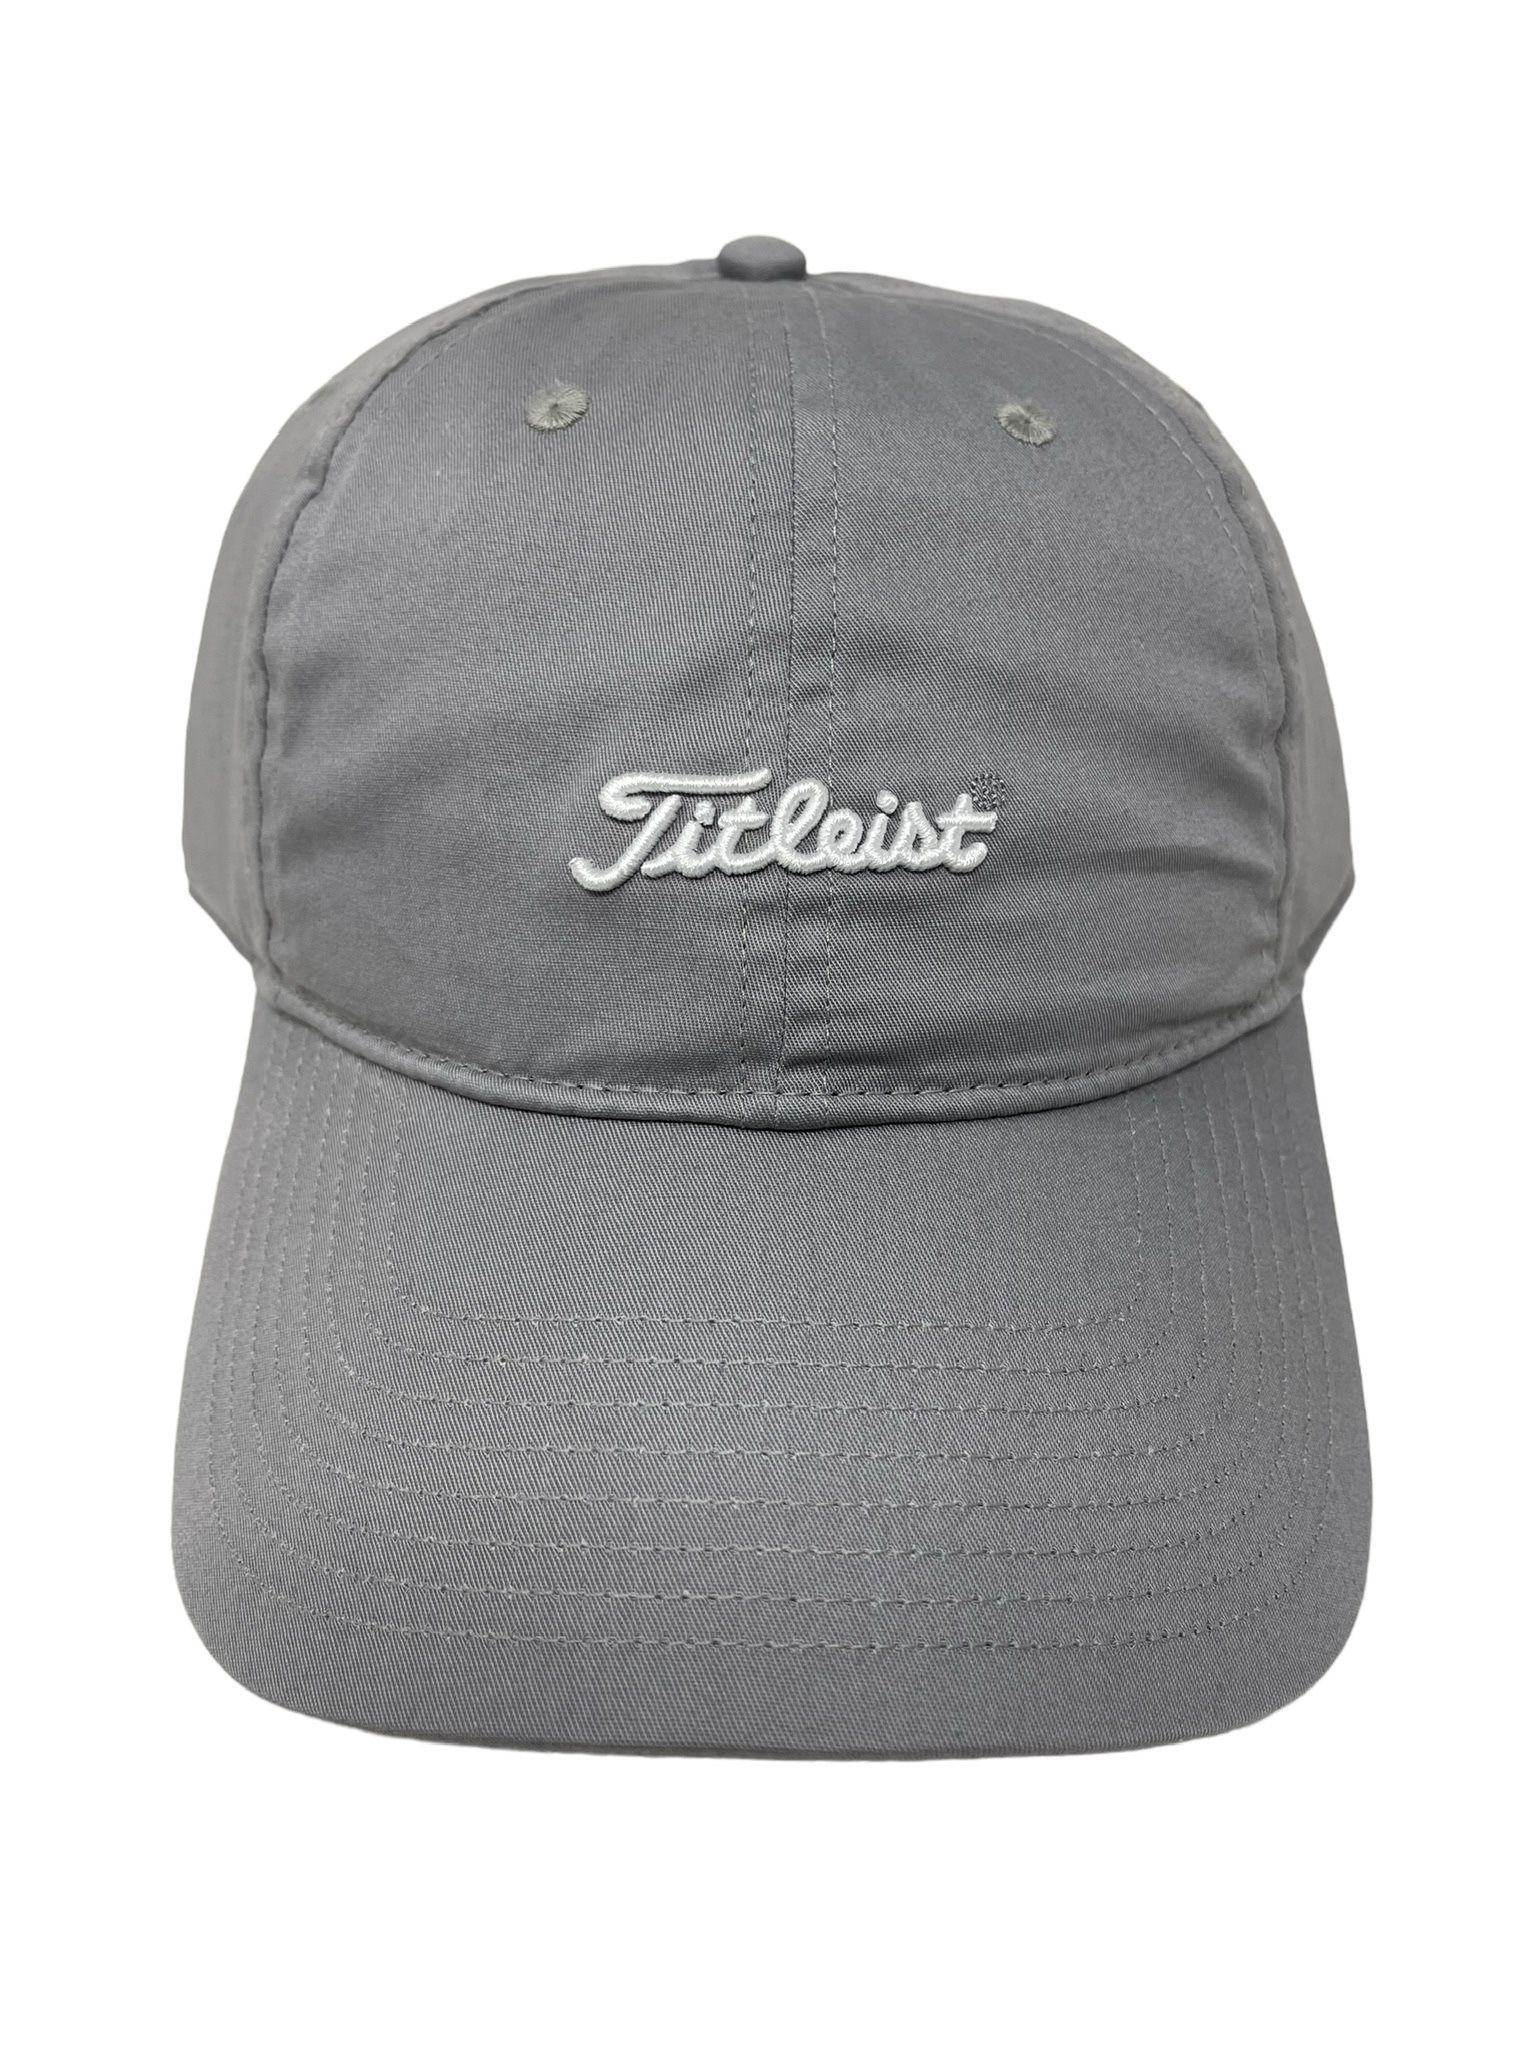 NEW Titleist Golf ⛳️ Hat Gray Cap Strap Back Adjustable Mens UV Nantucket